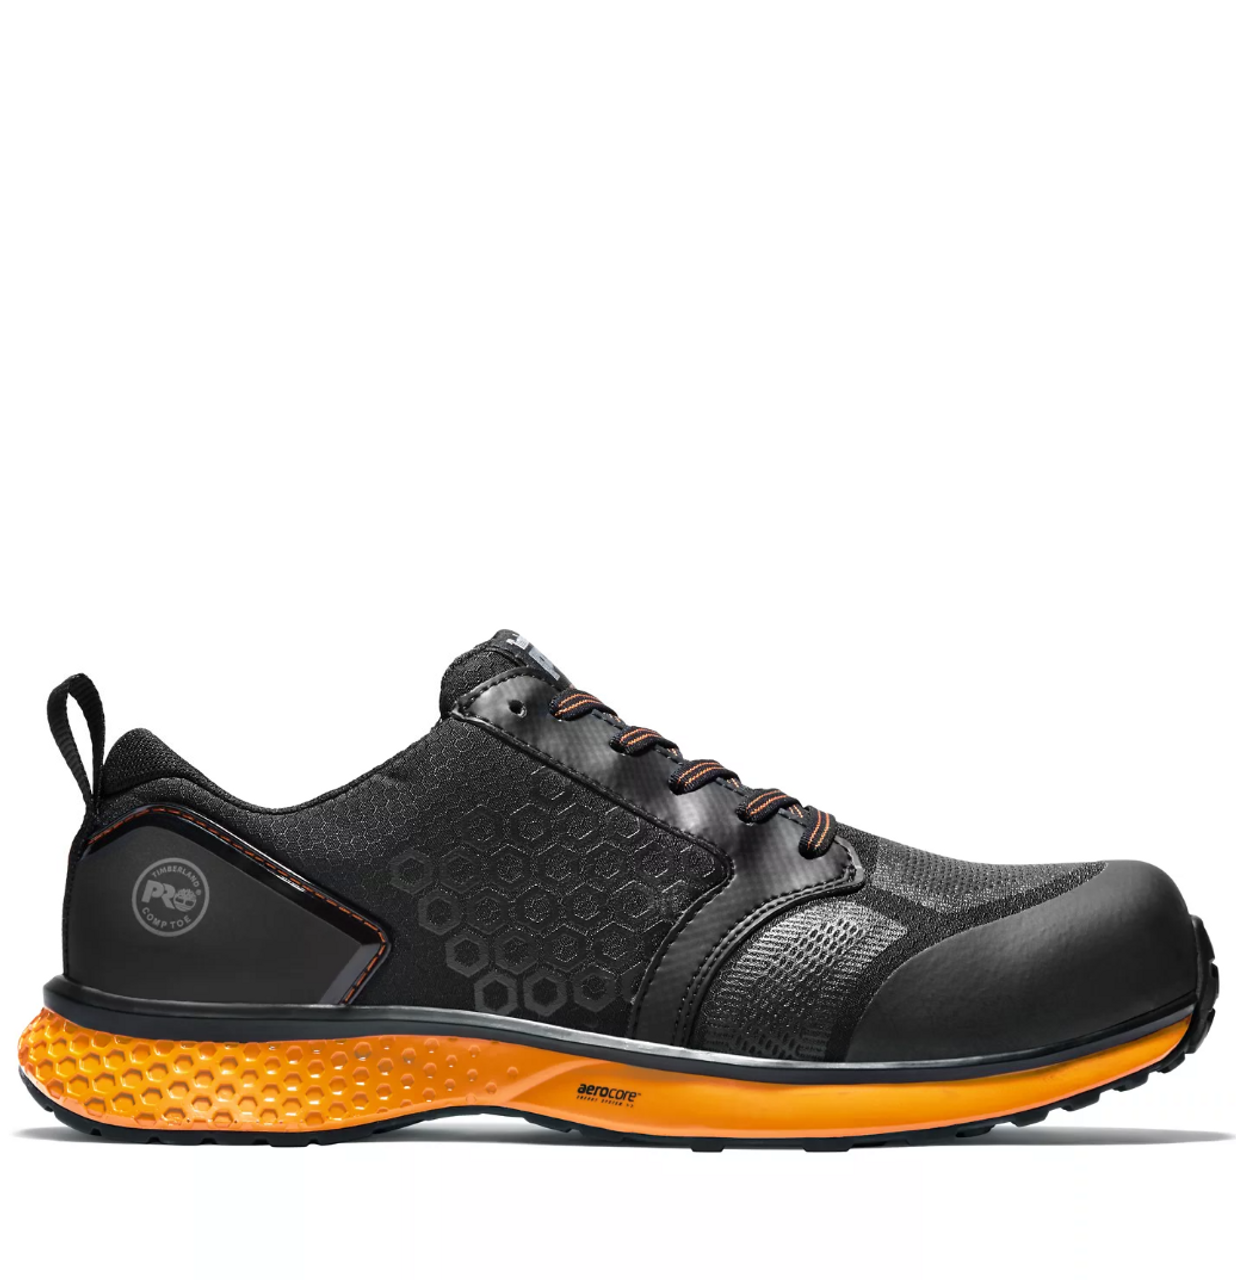 Timberland Pro Men's Reaxion Composite Toe Shoes - Black/Orange -